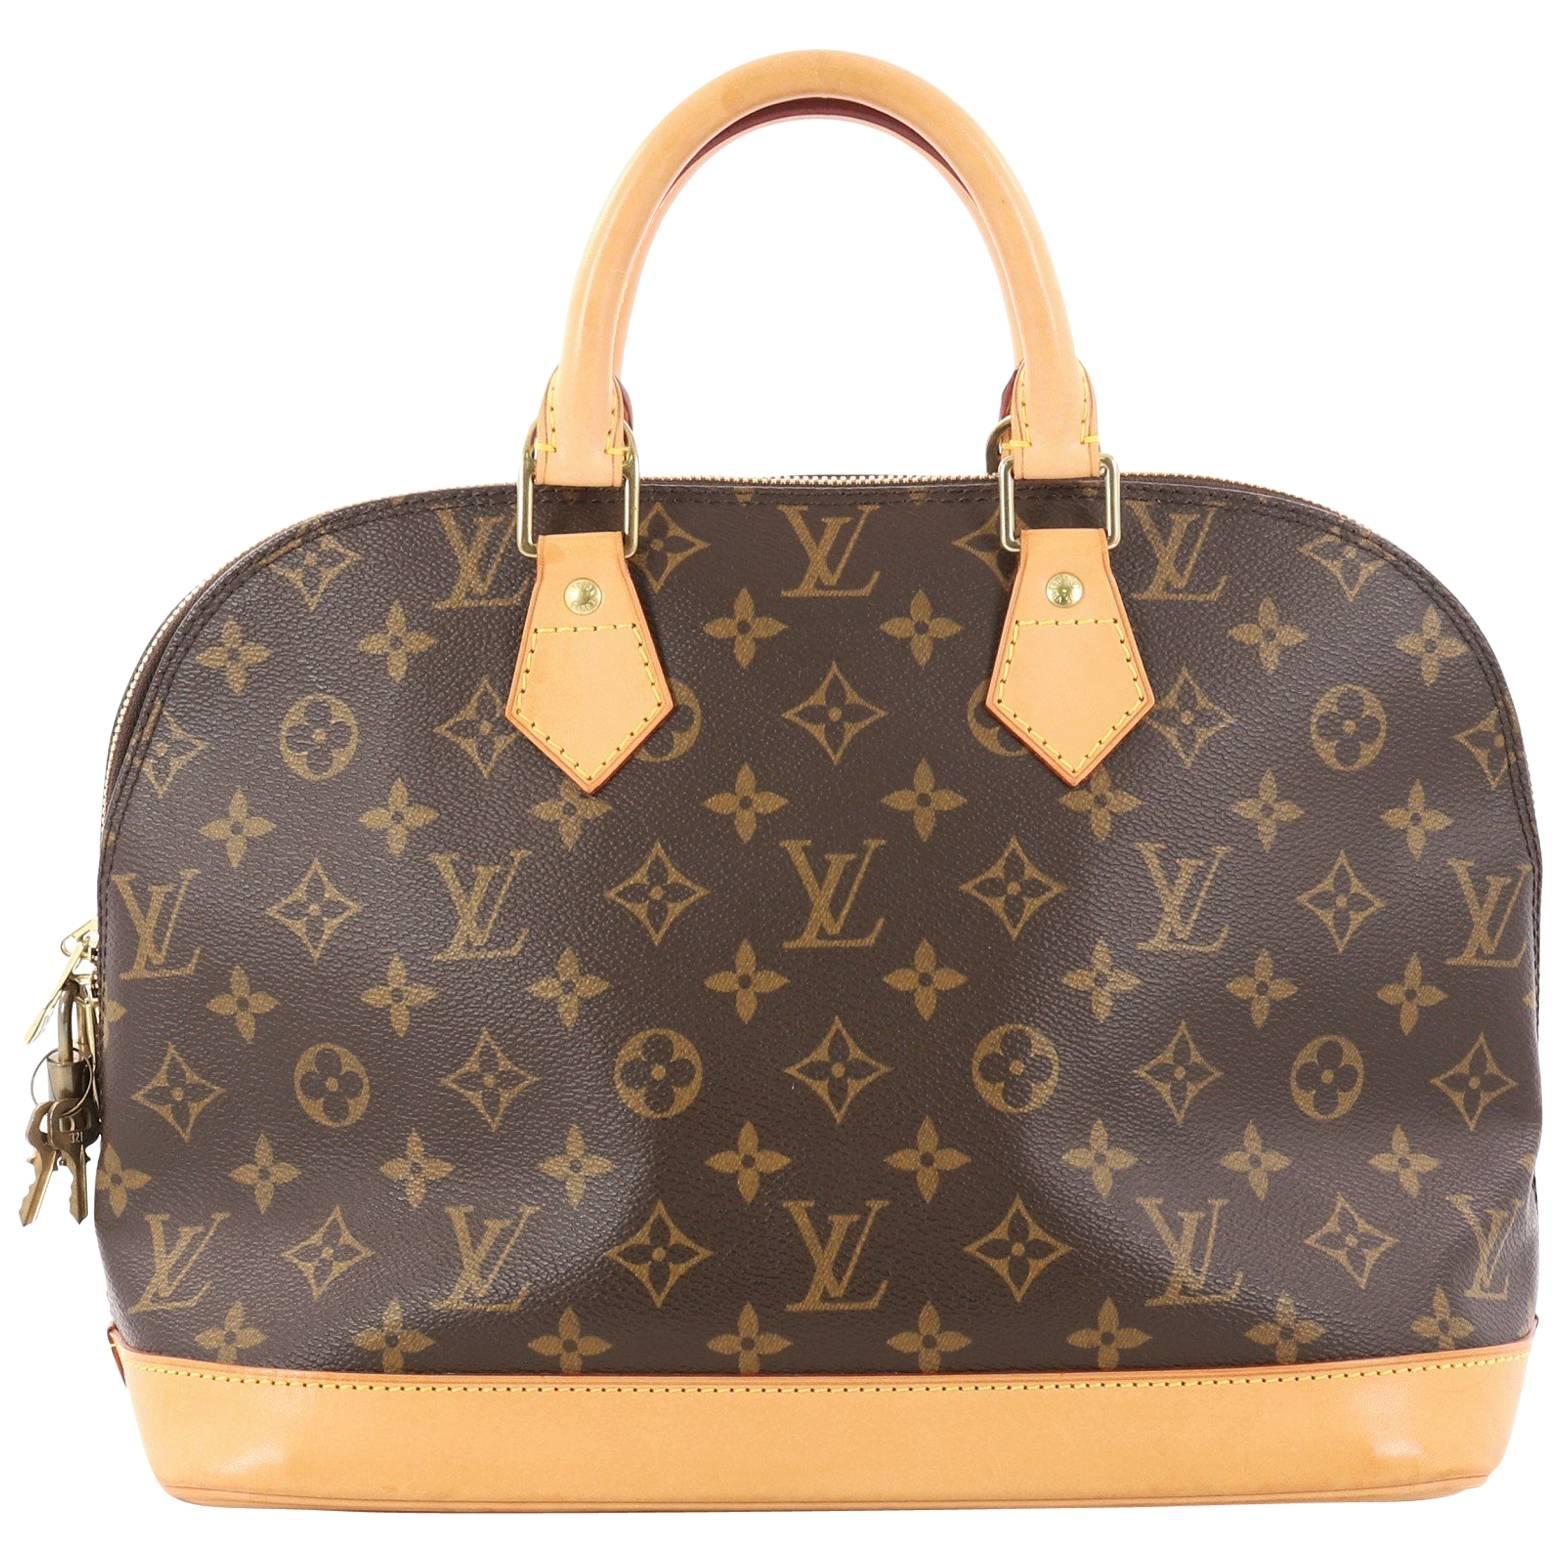 Louis Vuitton Alma Shoulder bag 335205